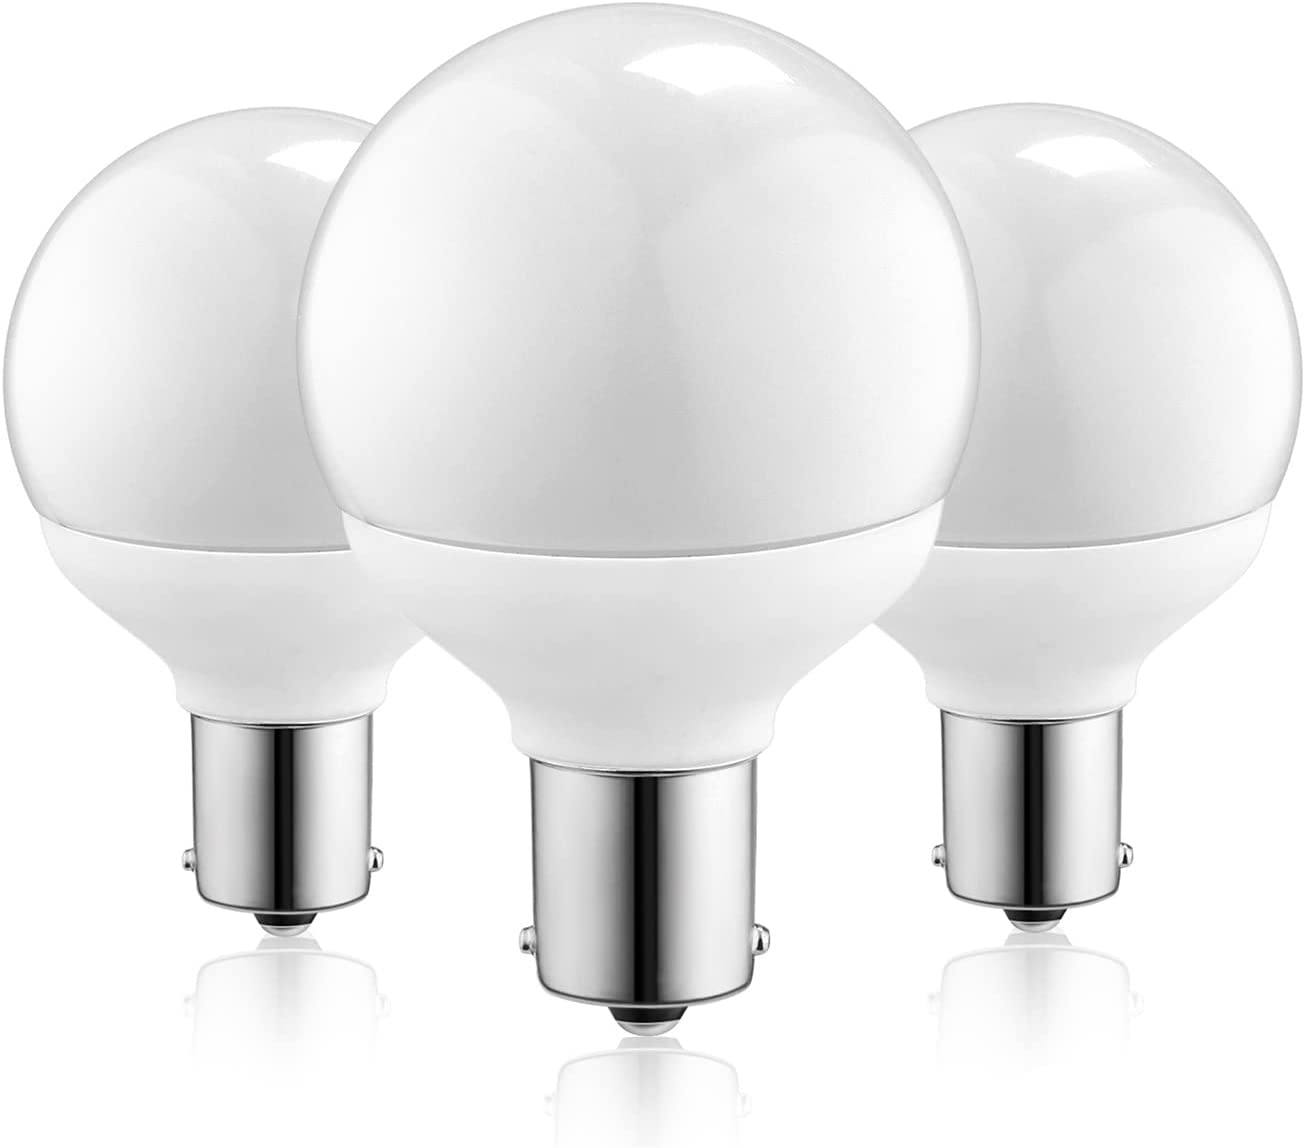 Kohree 12V RV Led Light Bulbs